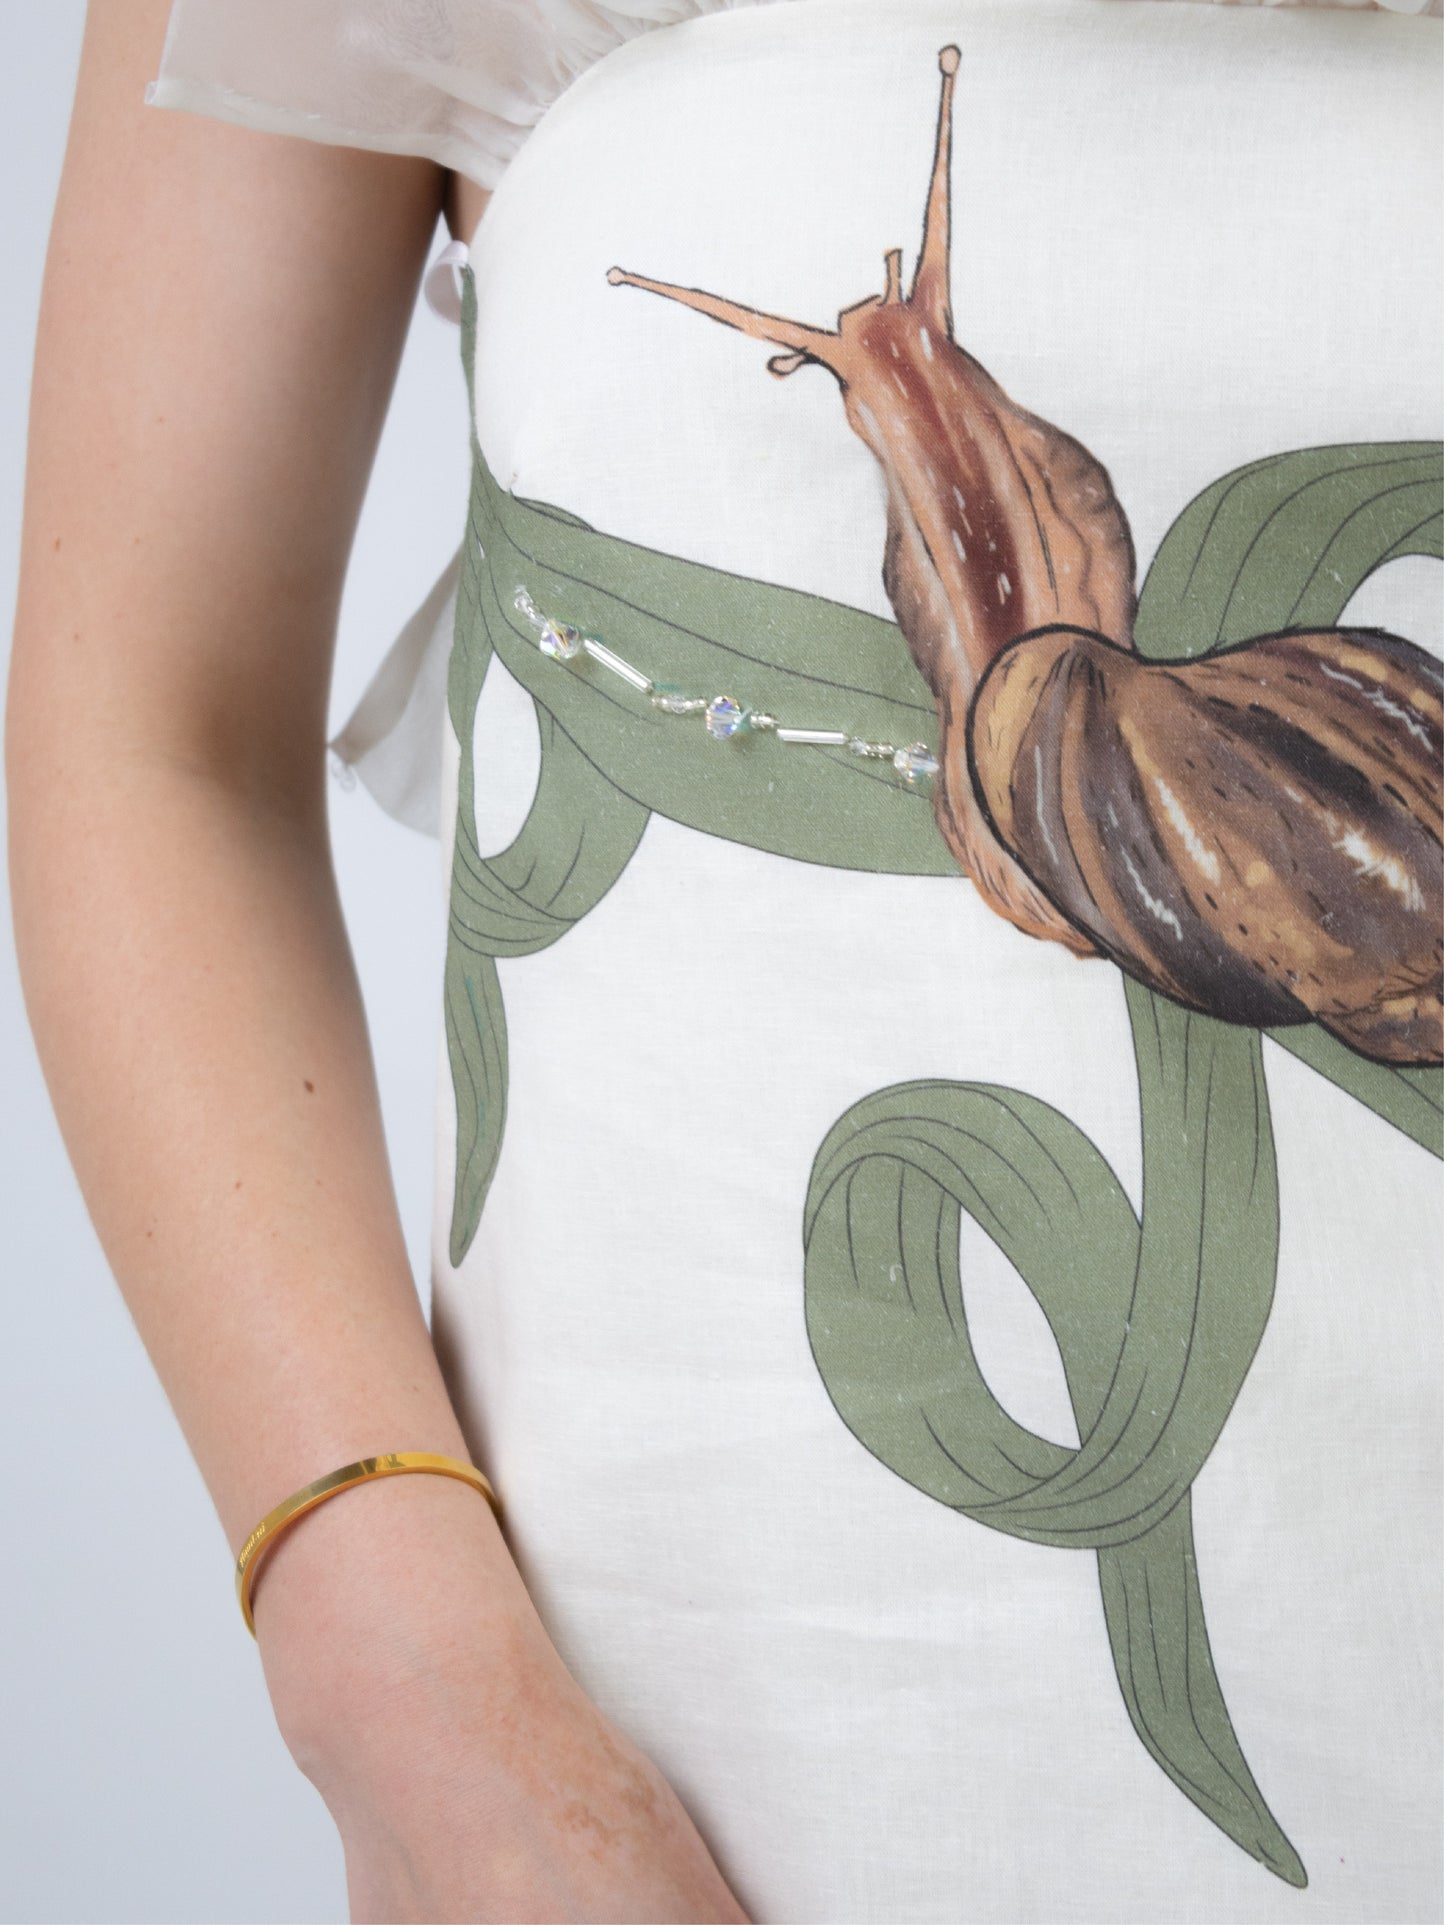 The snail dress